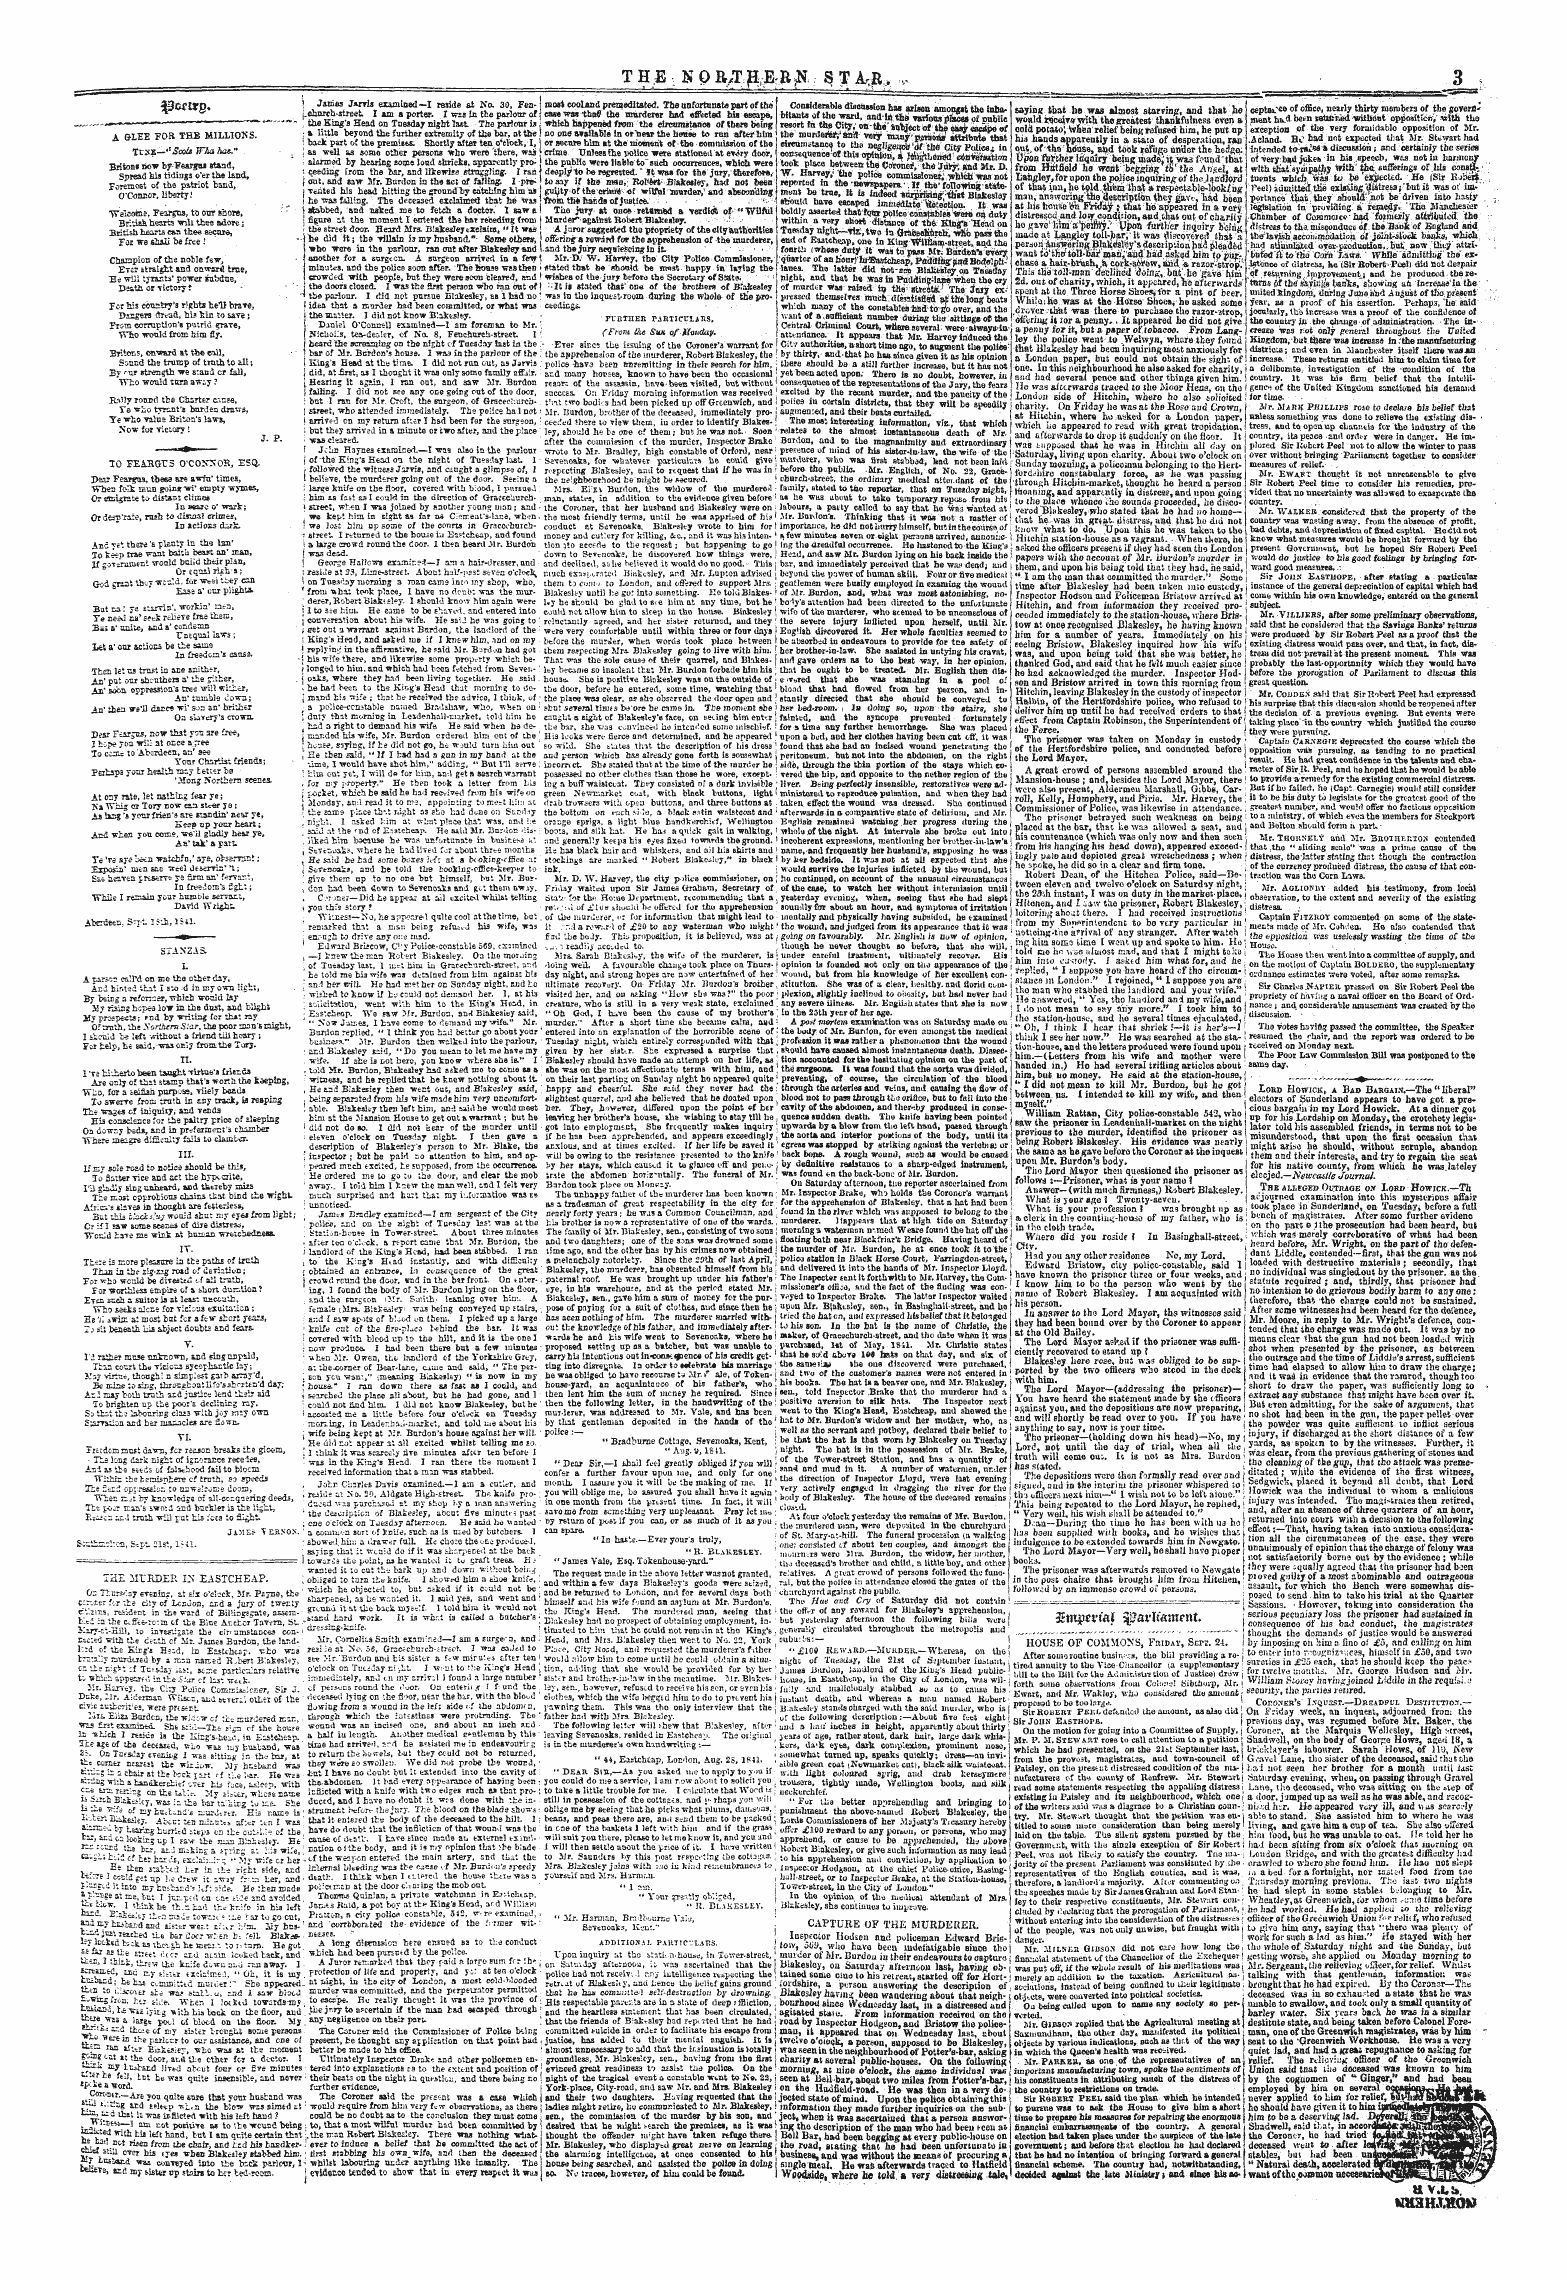 Northern Star (1837-1852): jS F Y, 1st edition - ^C*A Rg.